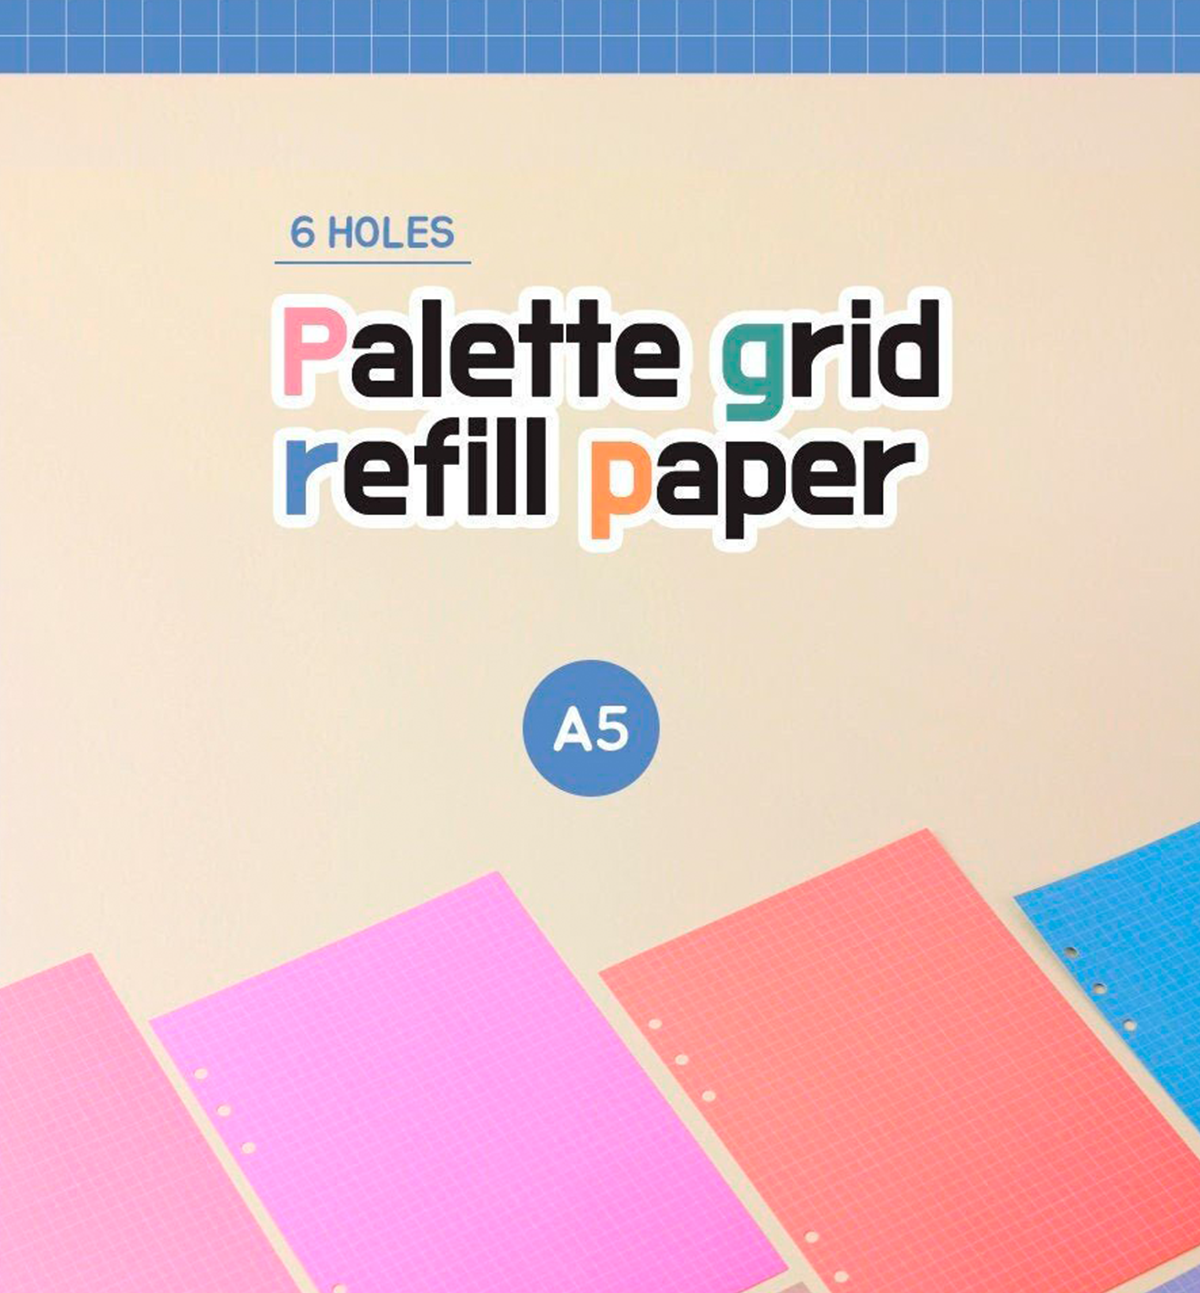 A5 Palette Grid Refill Paper